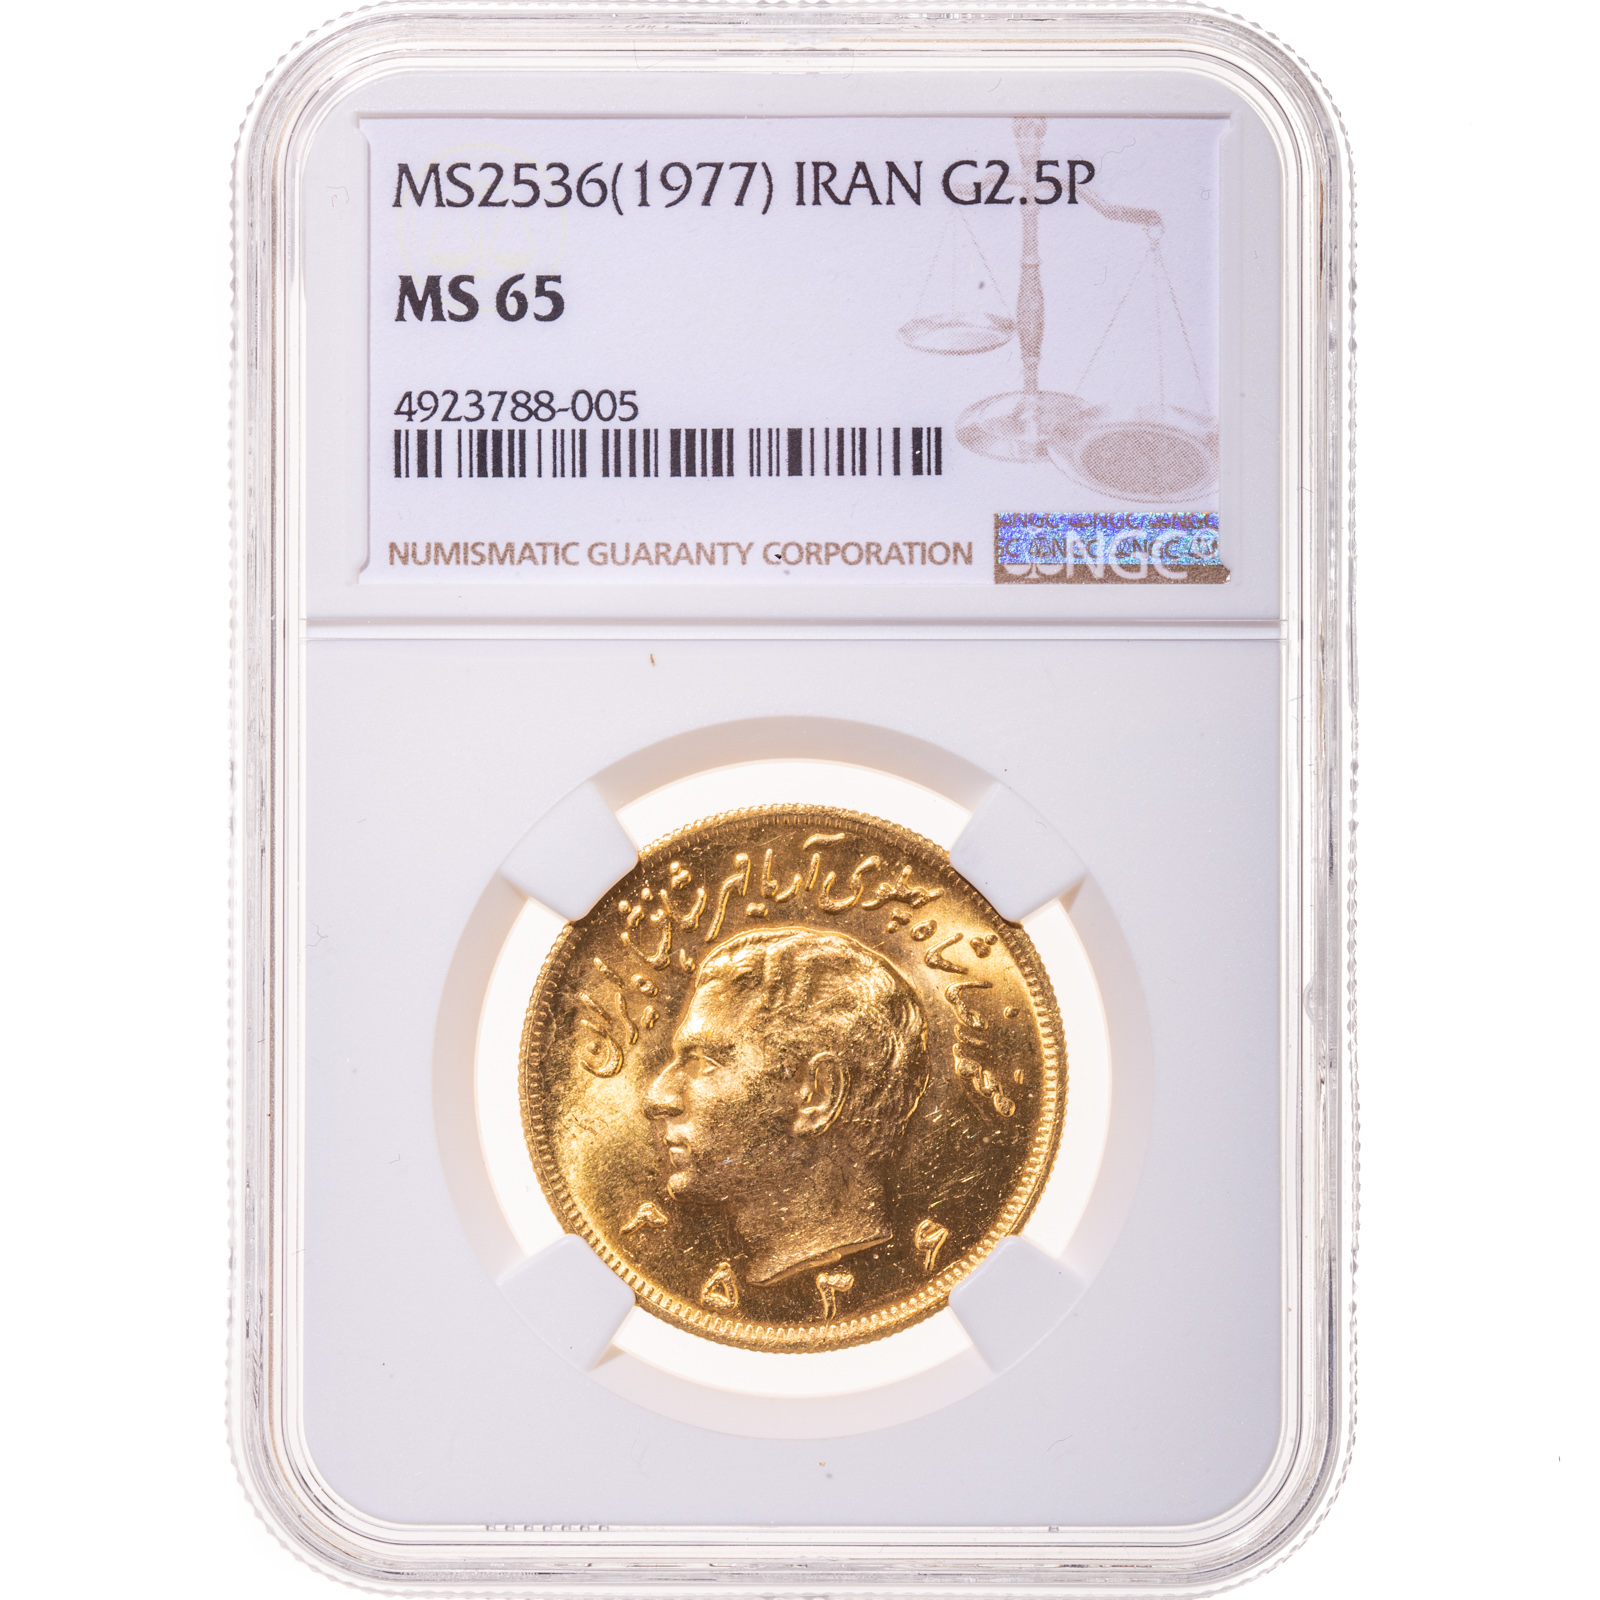 1977 (MS2536) IRAN GOLD 2.5 PAHLAVI